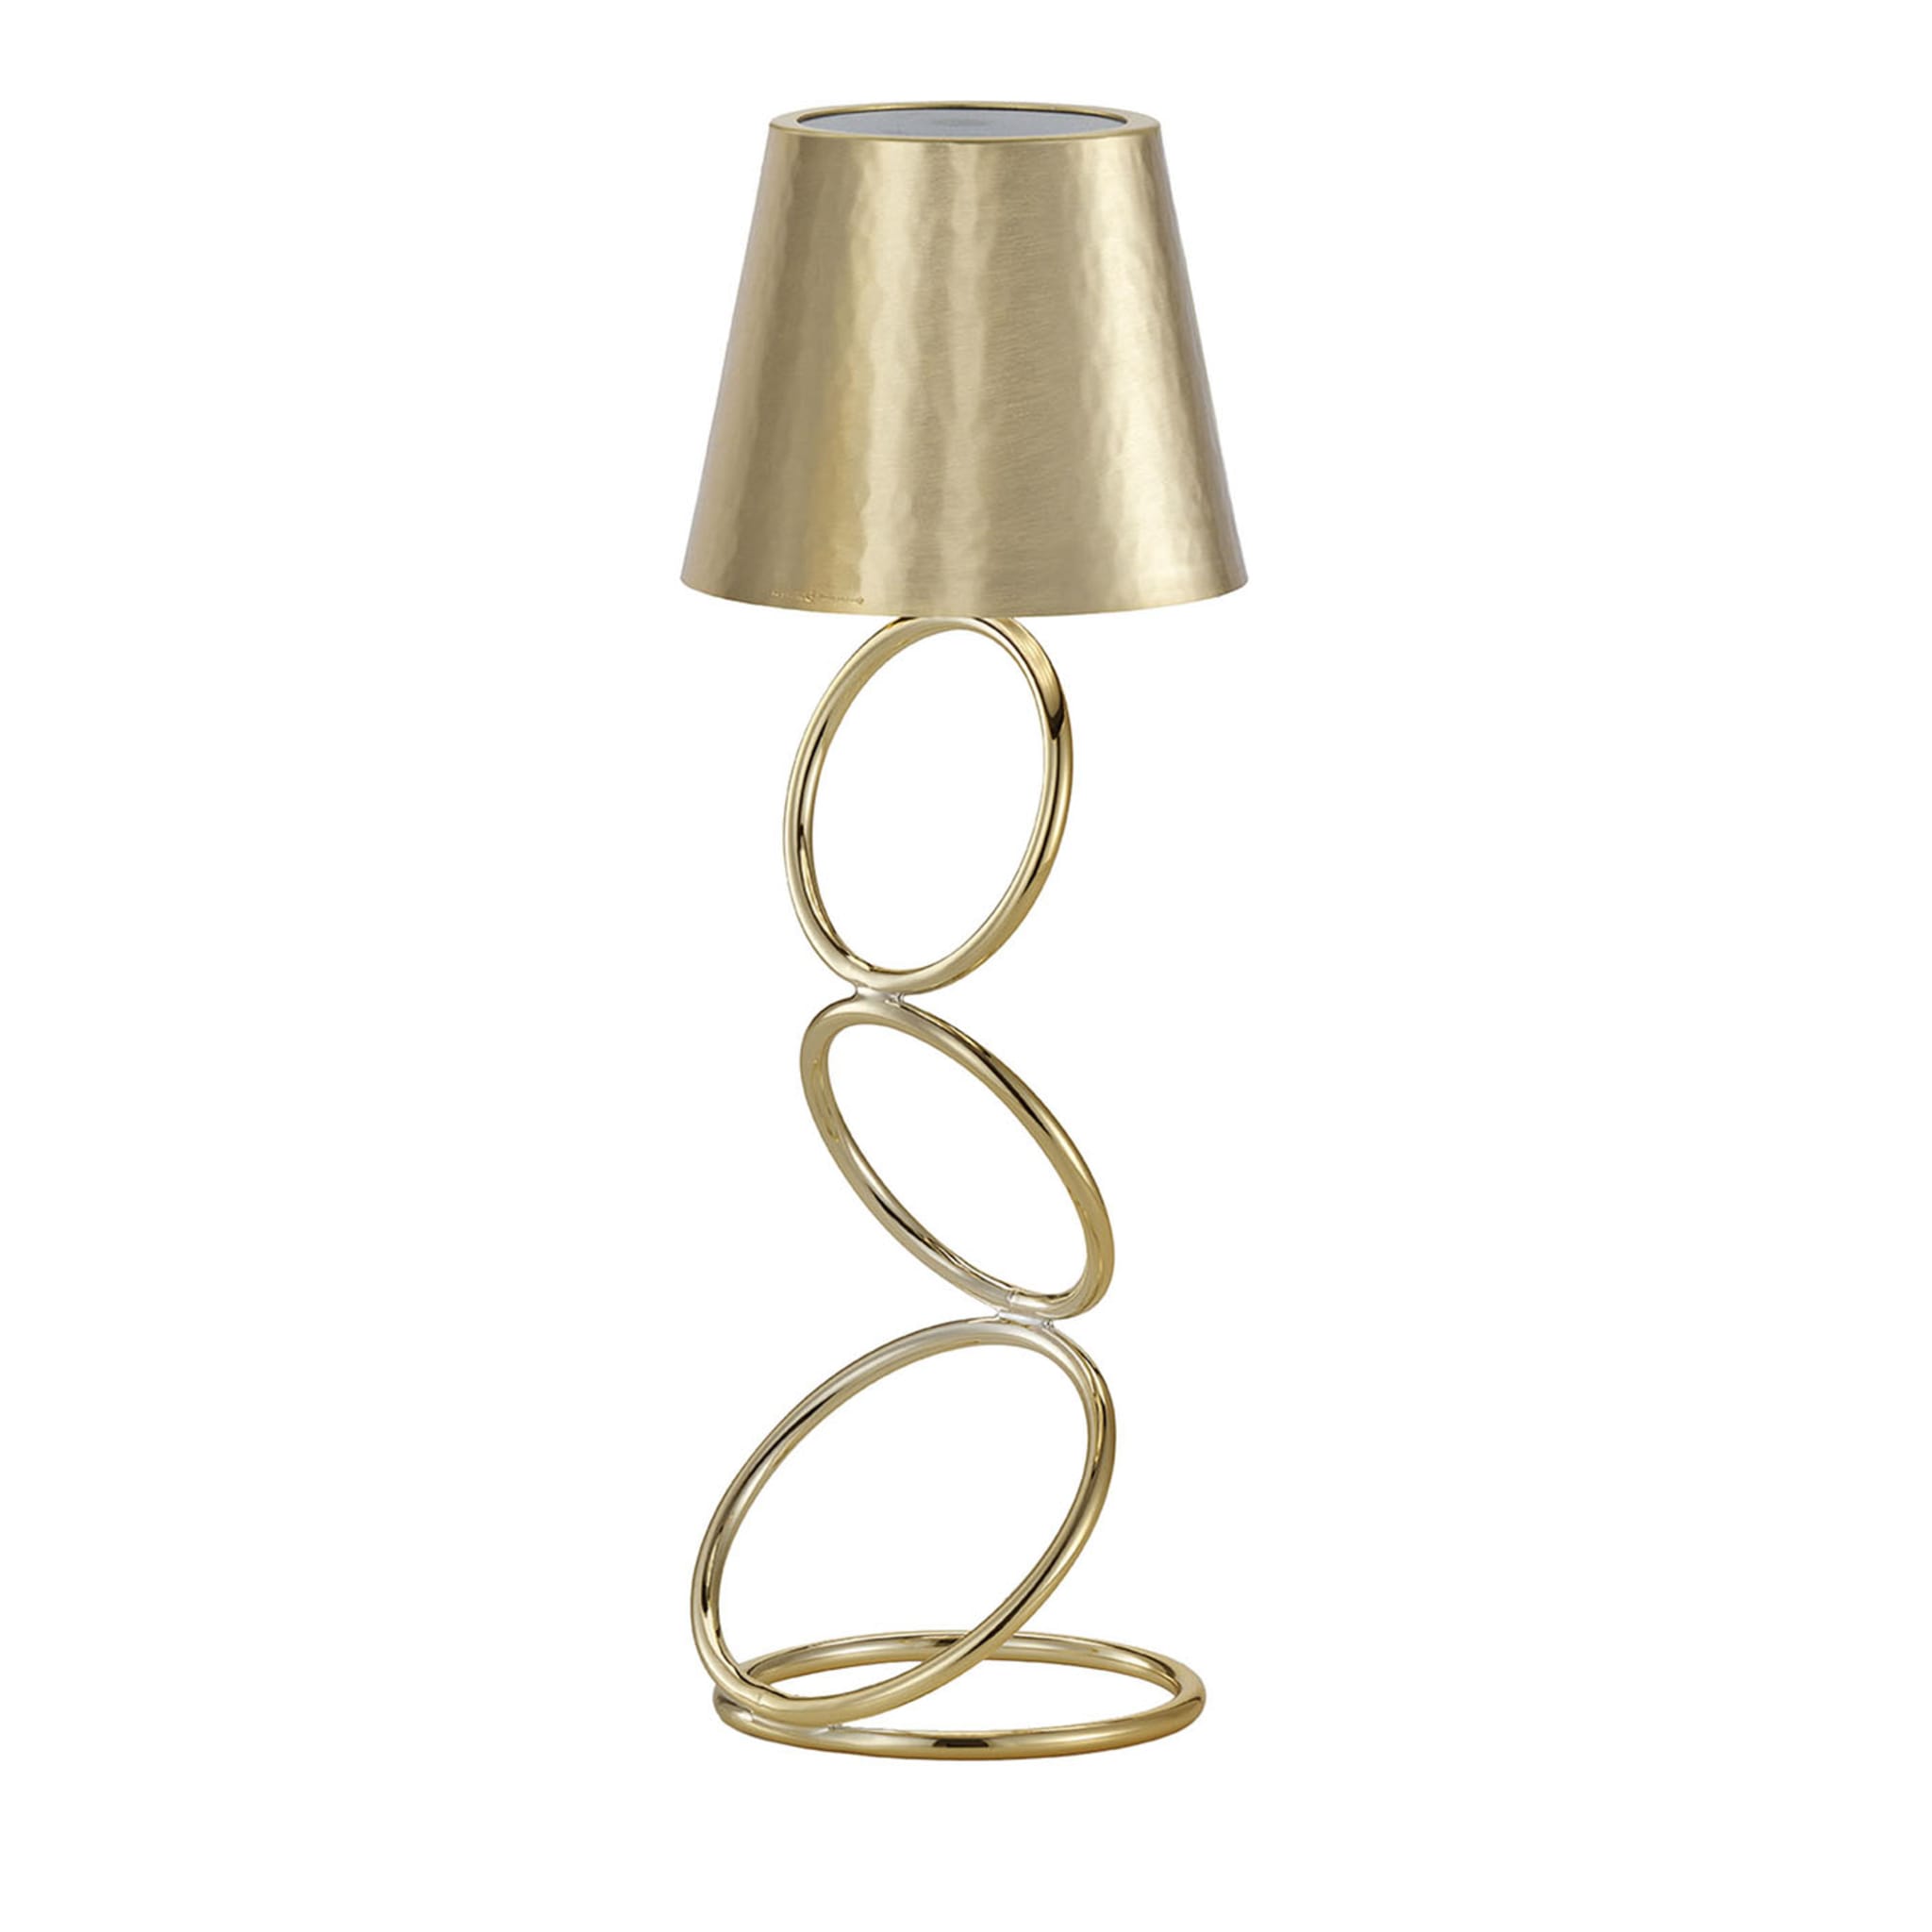 Goldene Lampe #4 von Itamar Harari - Hauptansicht